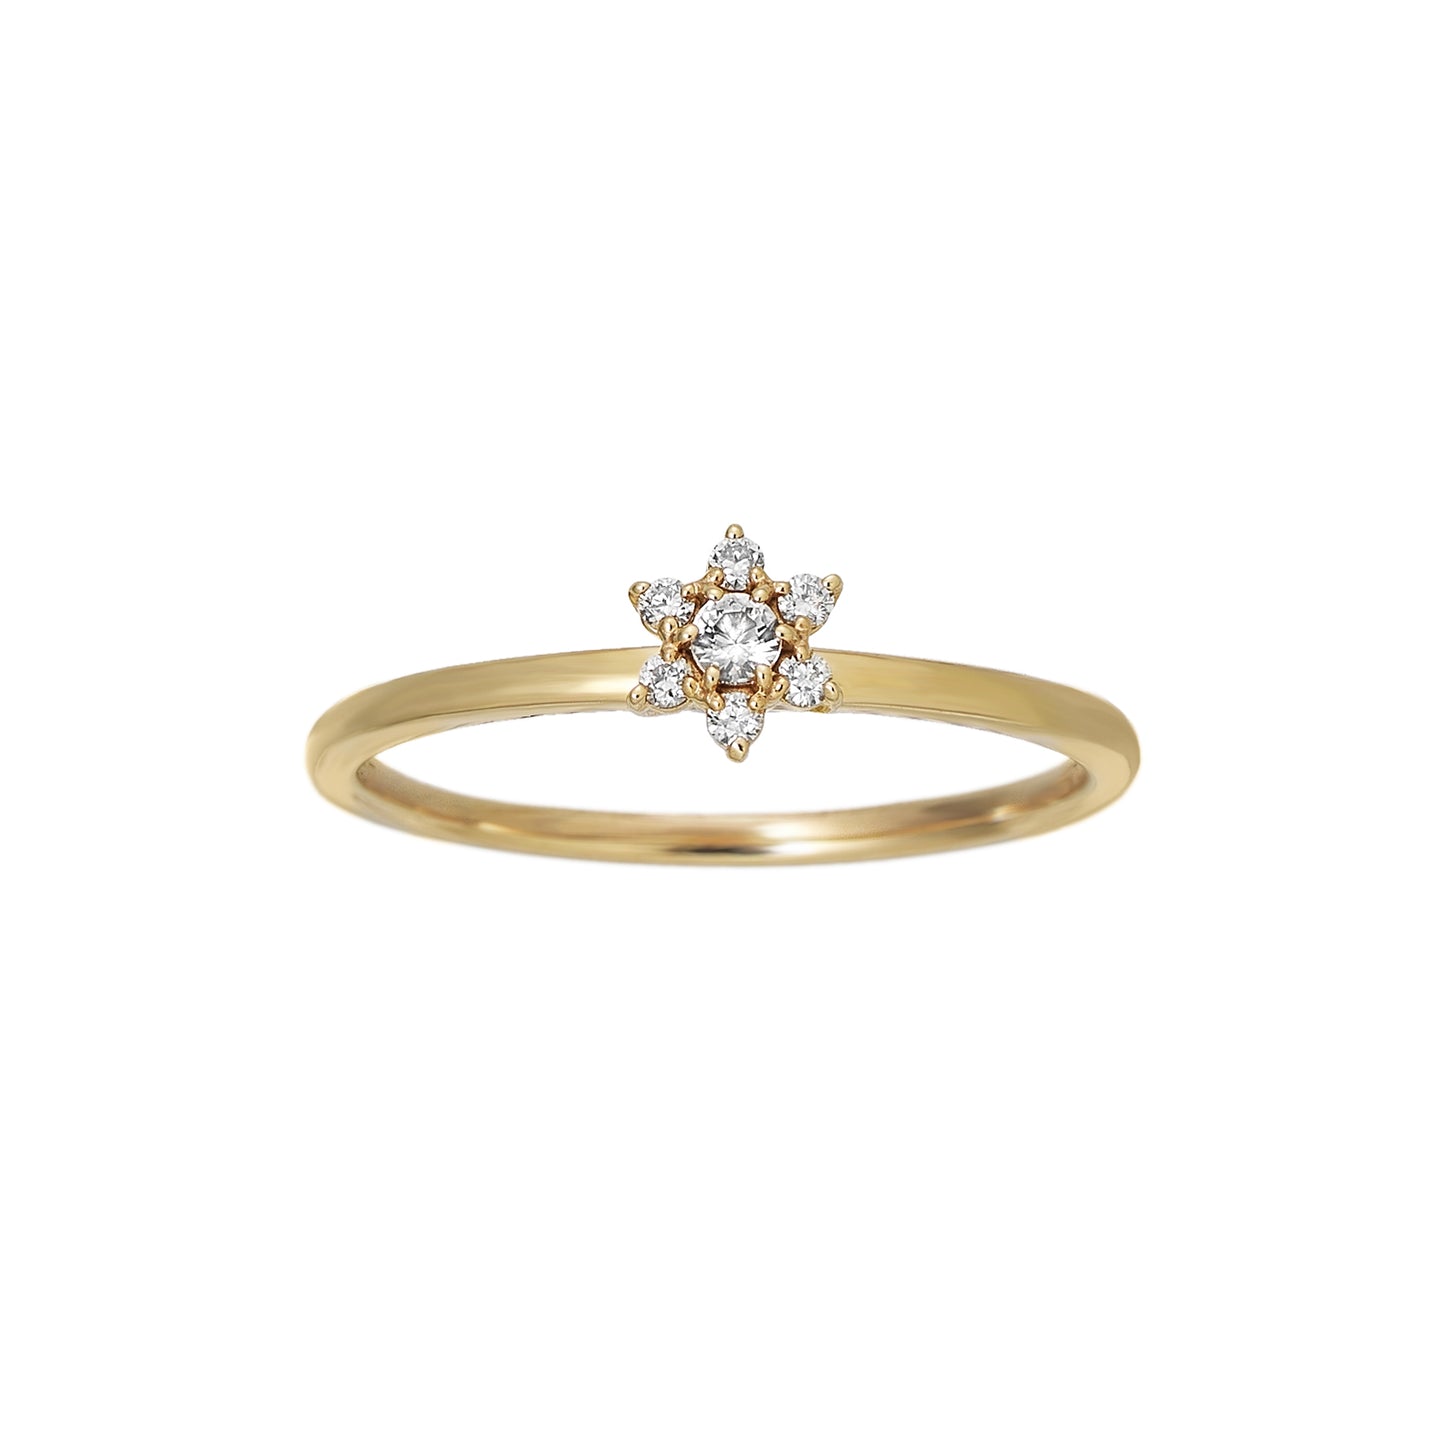 10K Yellow Gold Diamond Lumiere Ring - Product Image